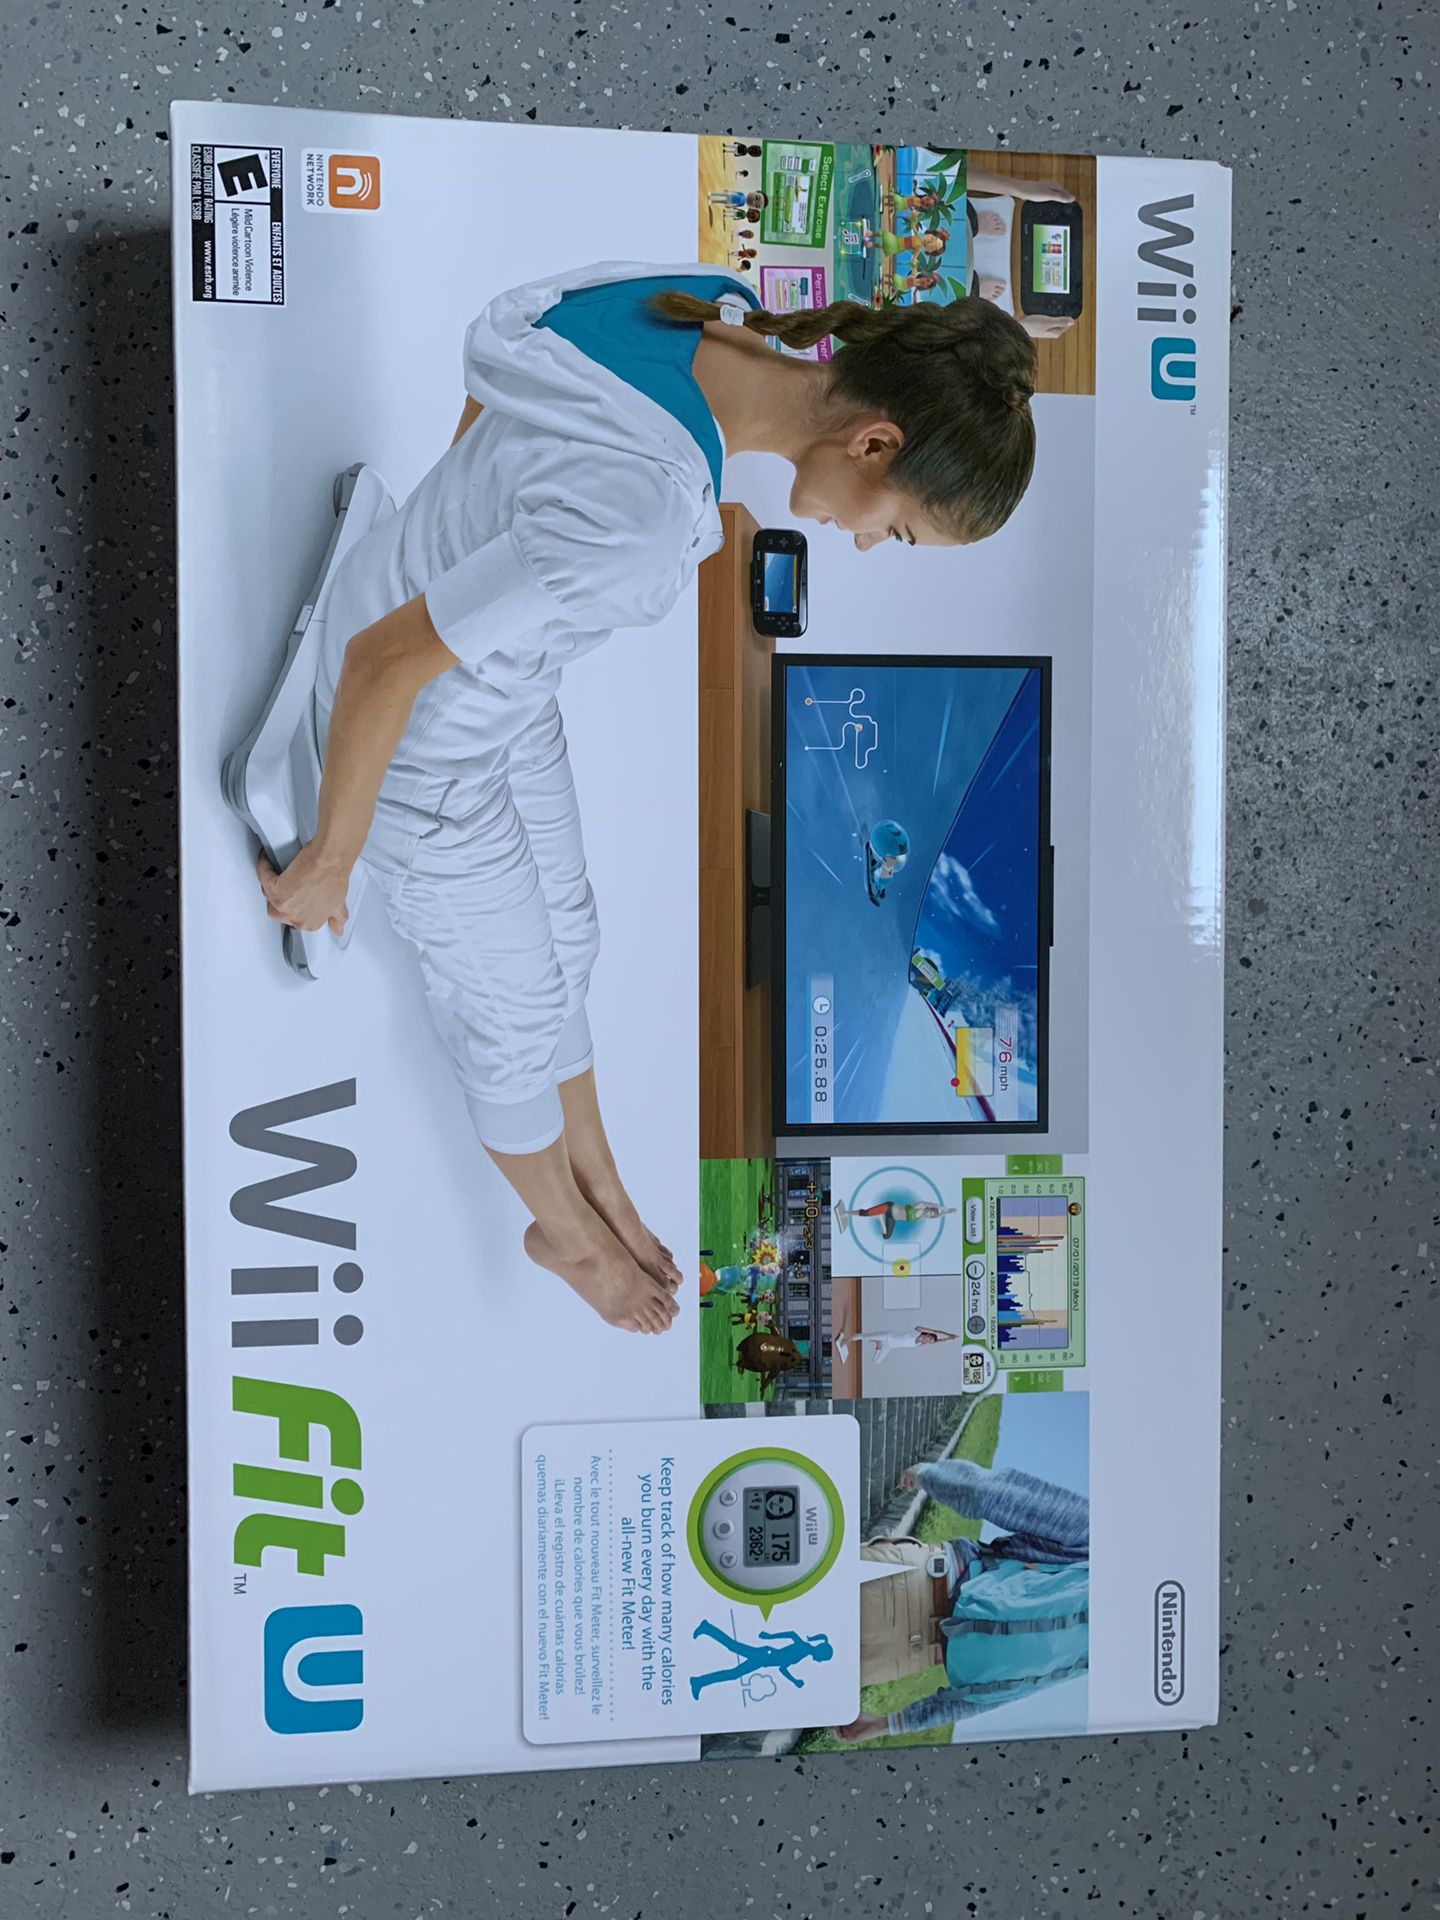 Nintendo Wii fit U bundle-Never opened